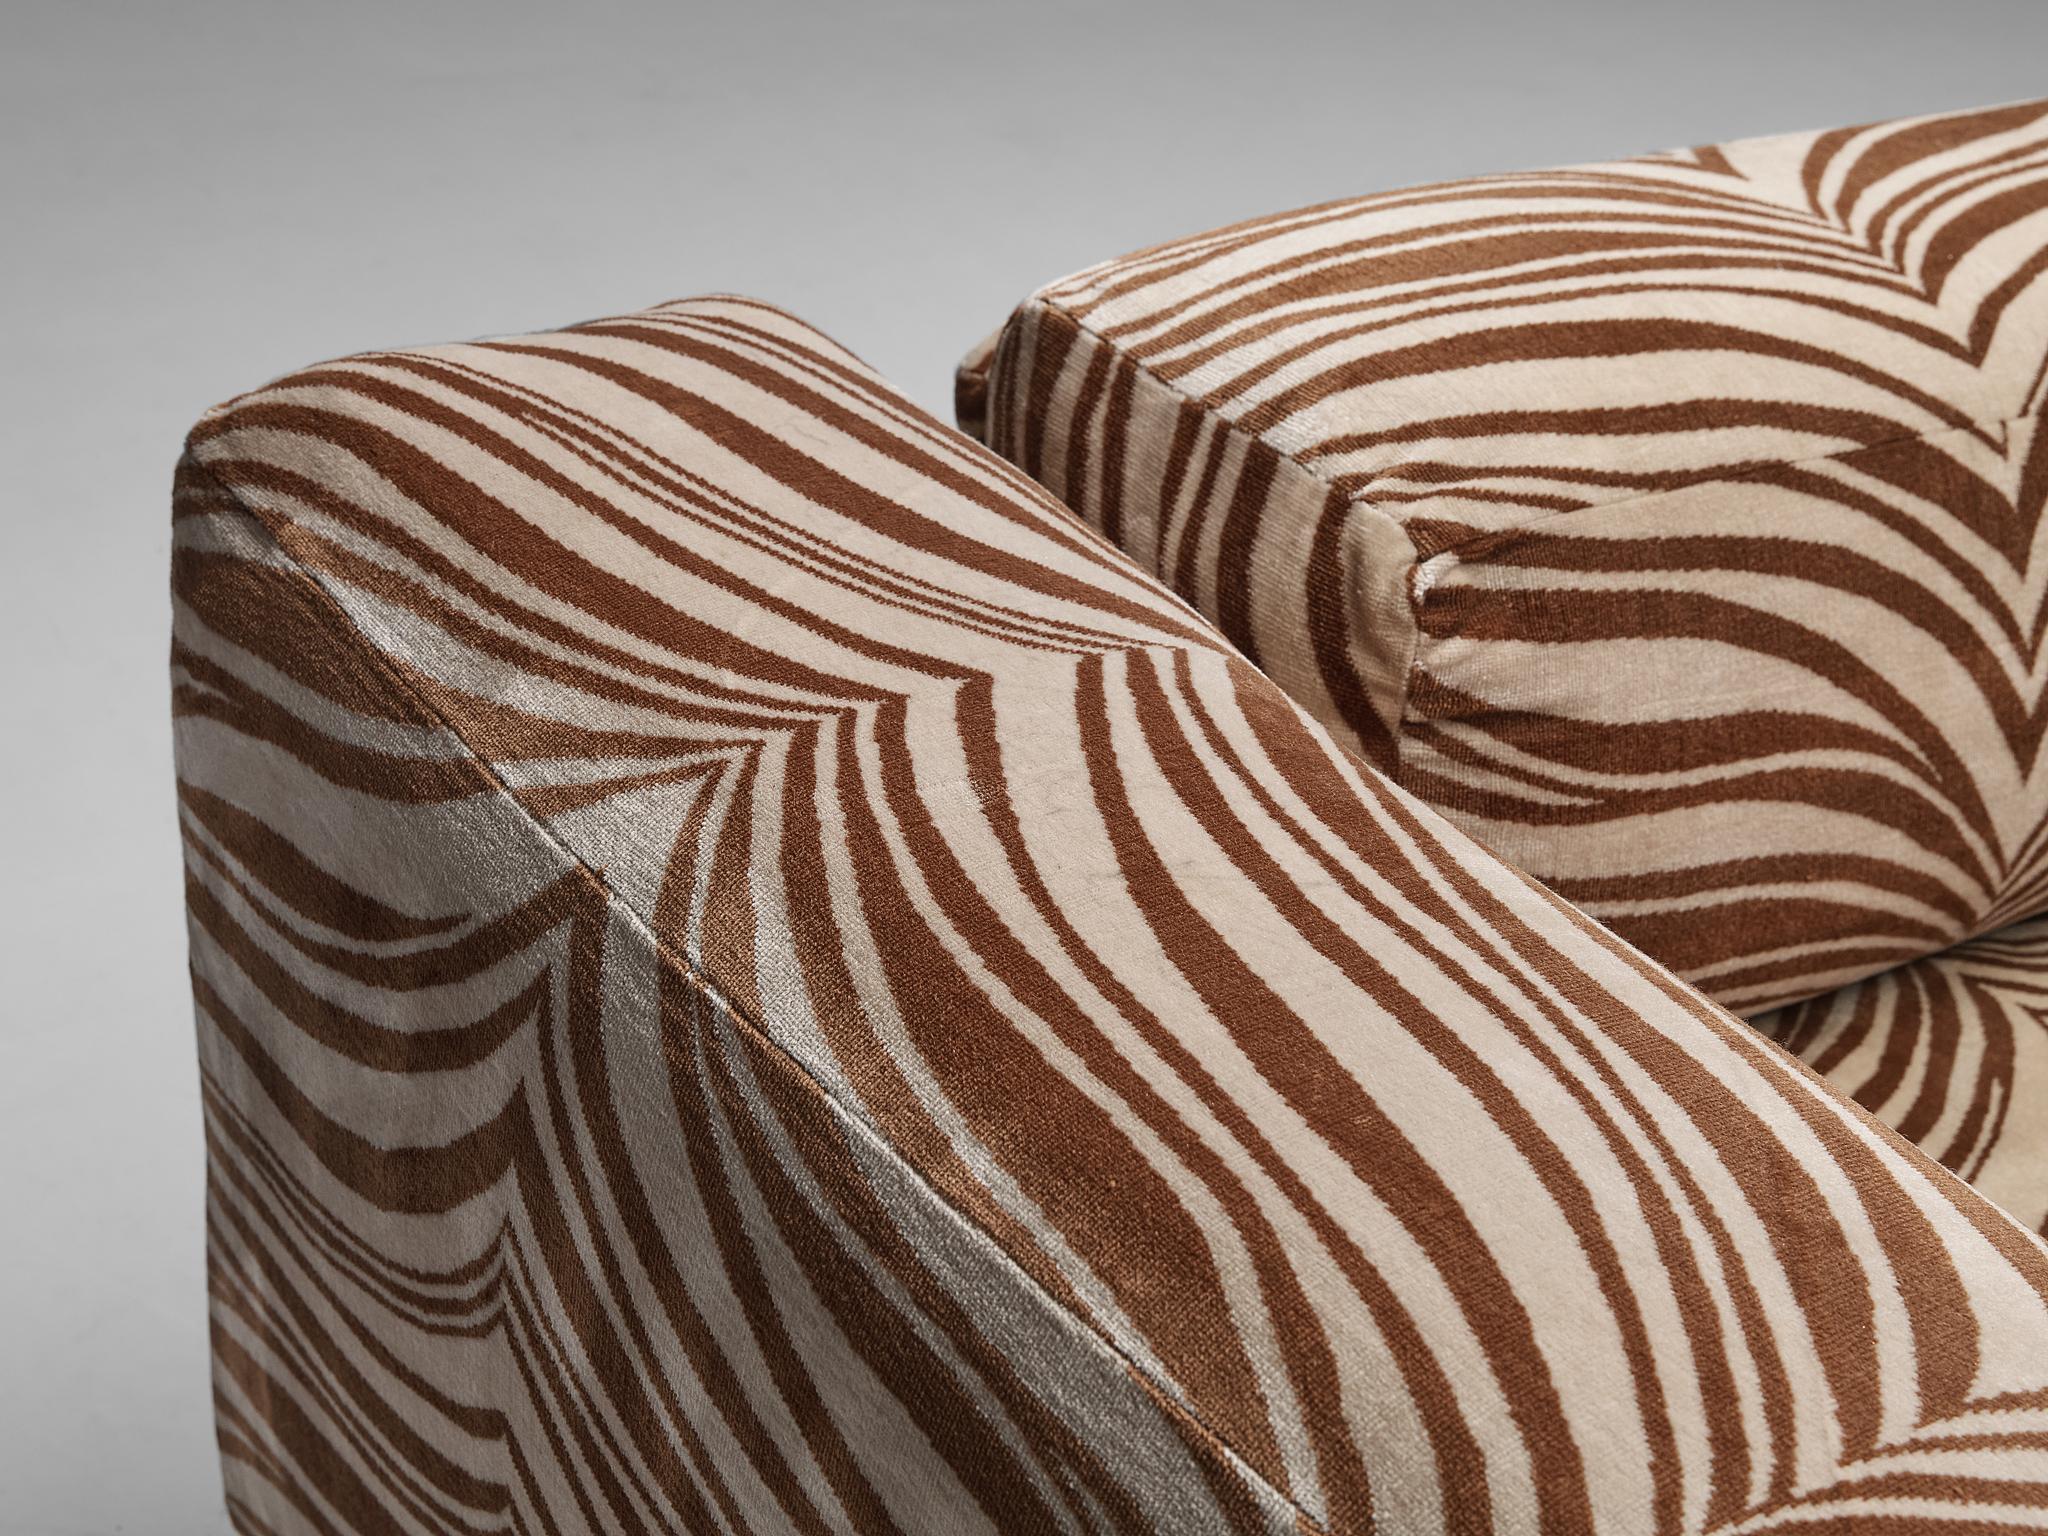 Steel Howard Keith 'Diplomat' Sofa in Original Striped Upholstery